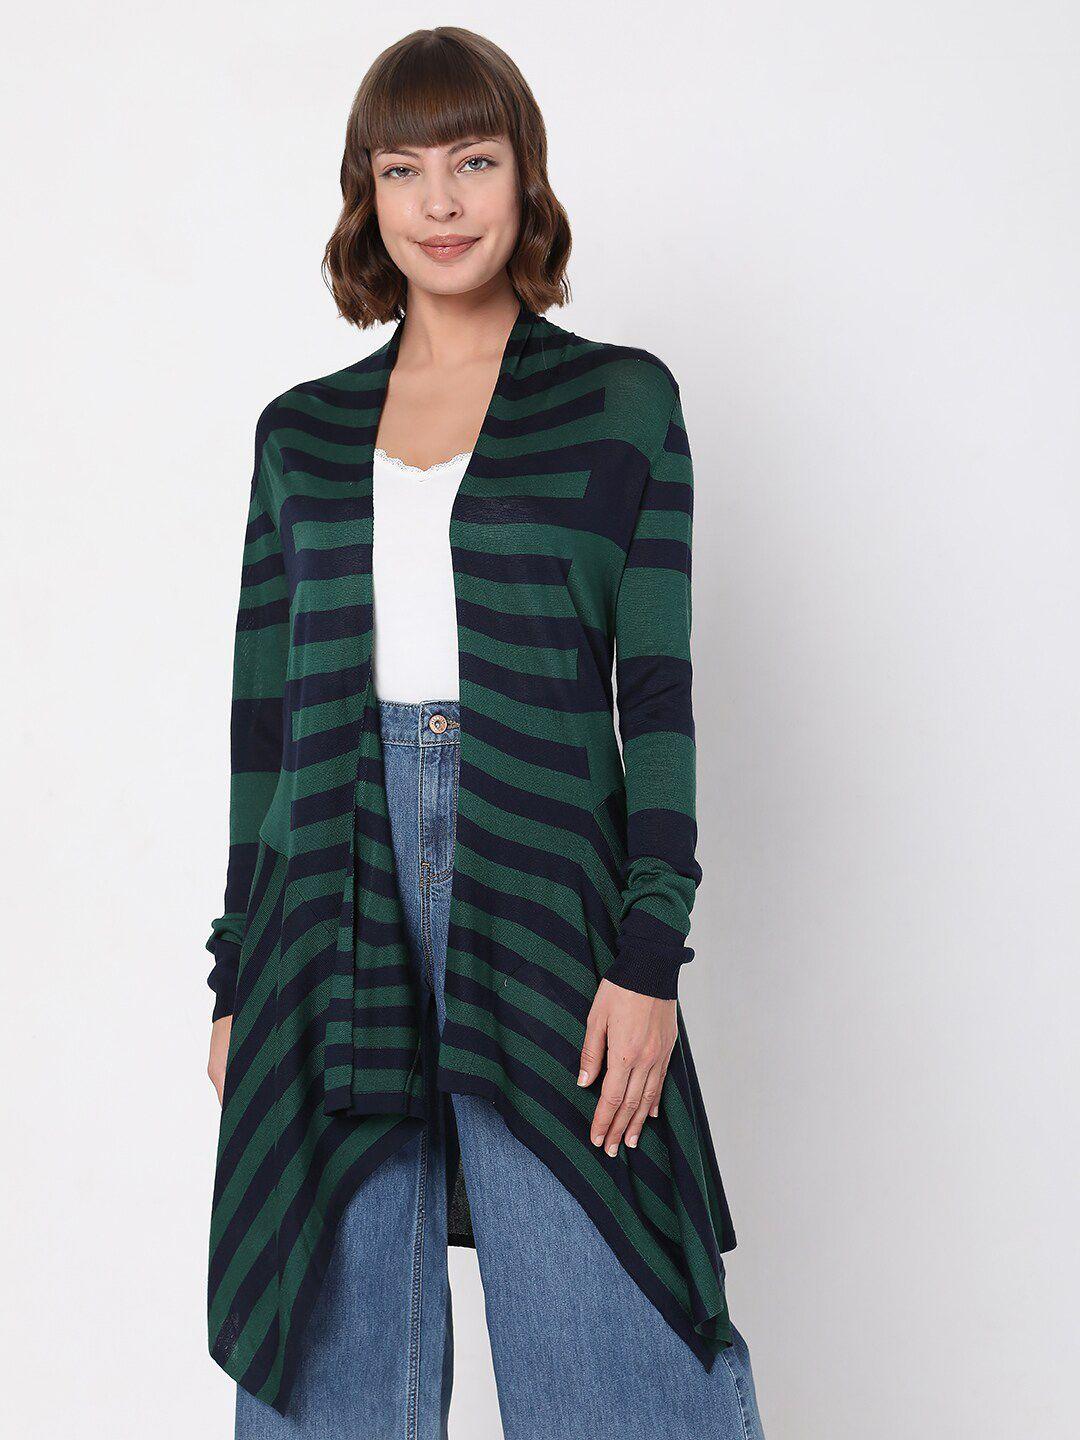 vero moda women green & black striped shrug